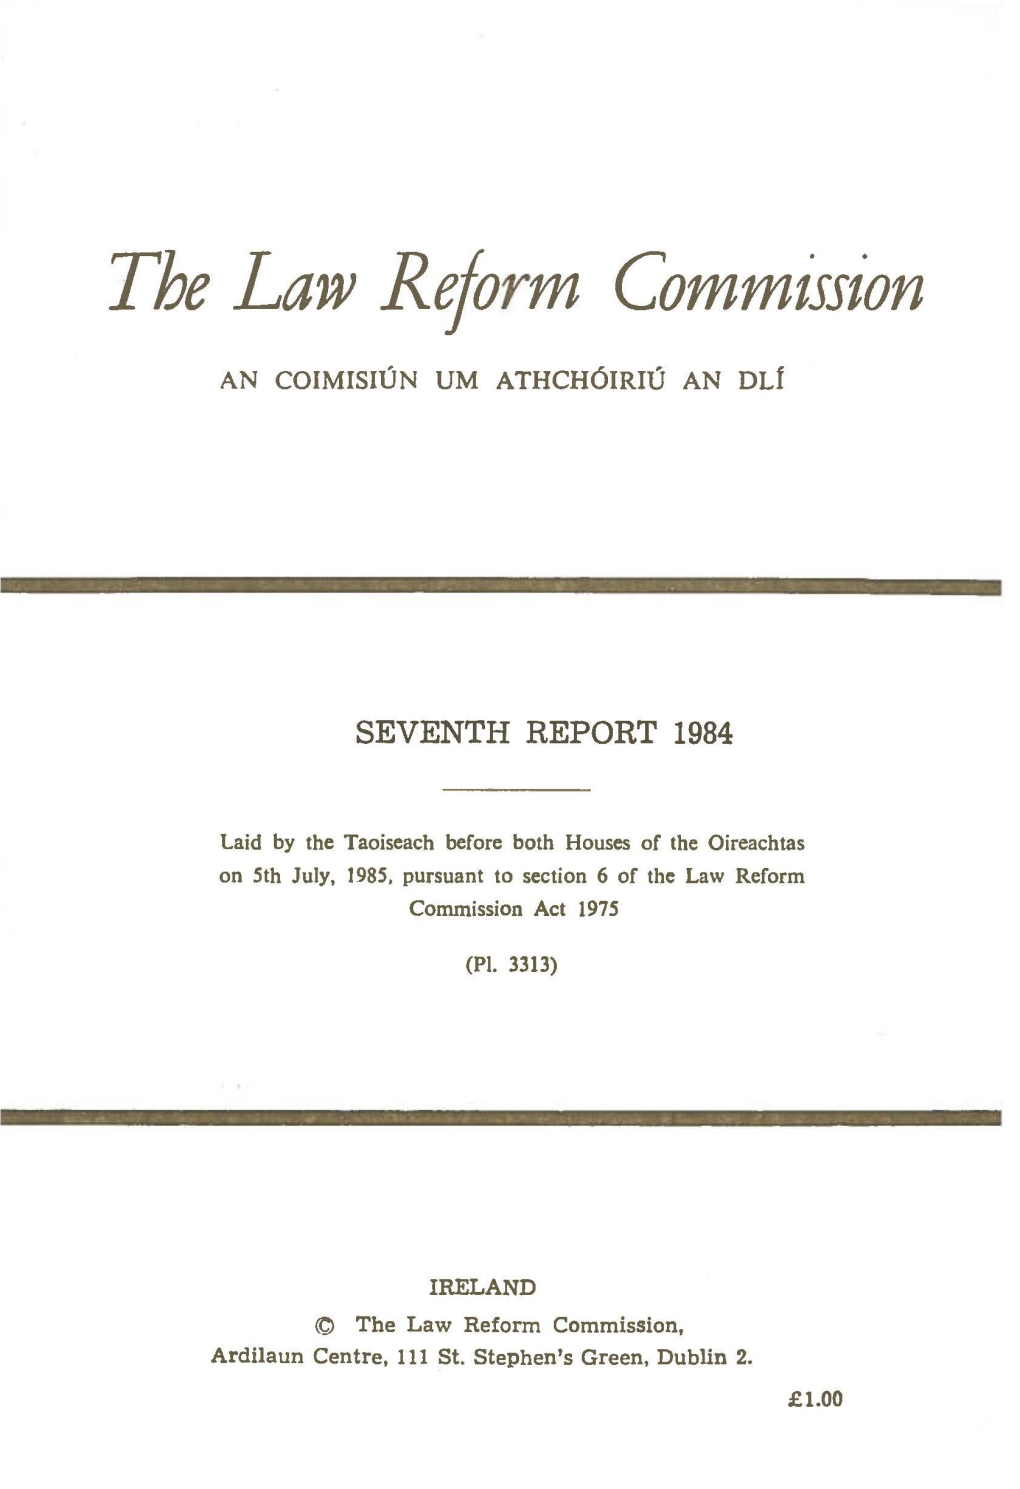 Seventh Annual Report 1984